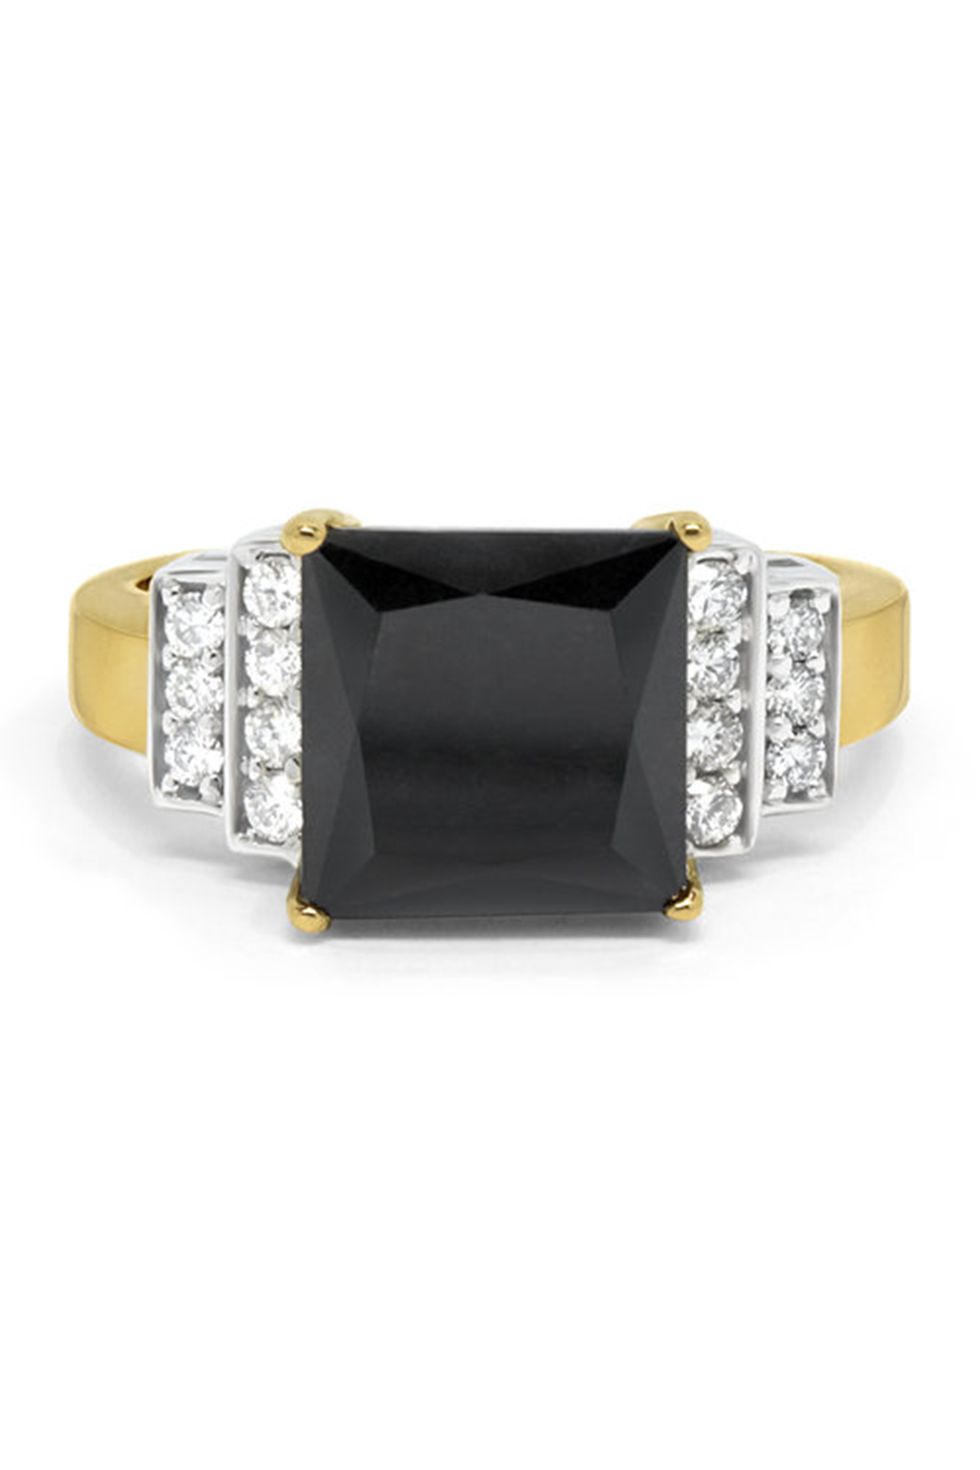 unique gemstone engagement rings   georgina boyce ring